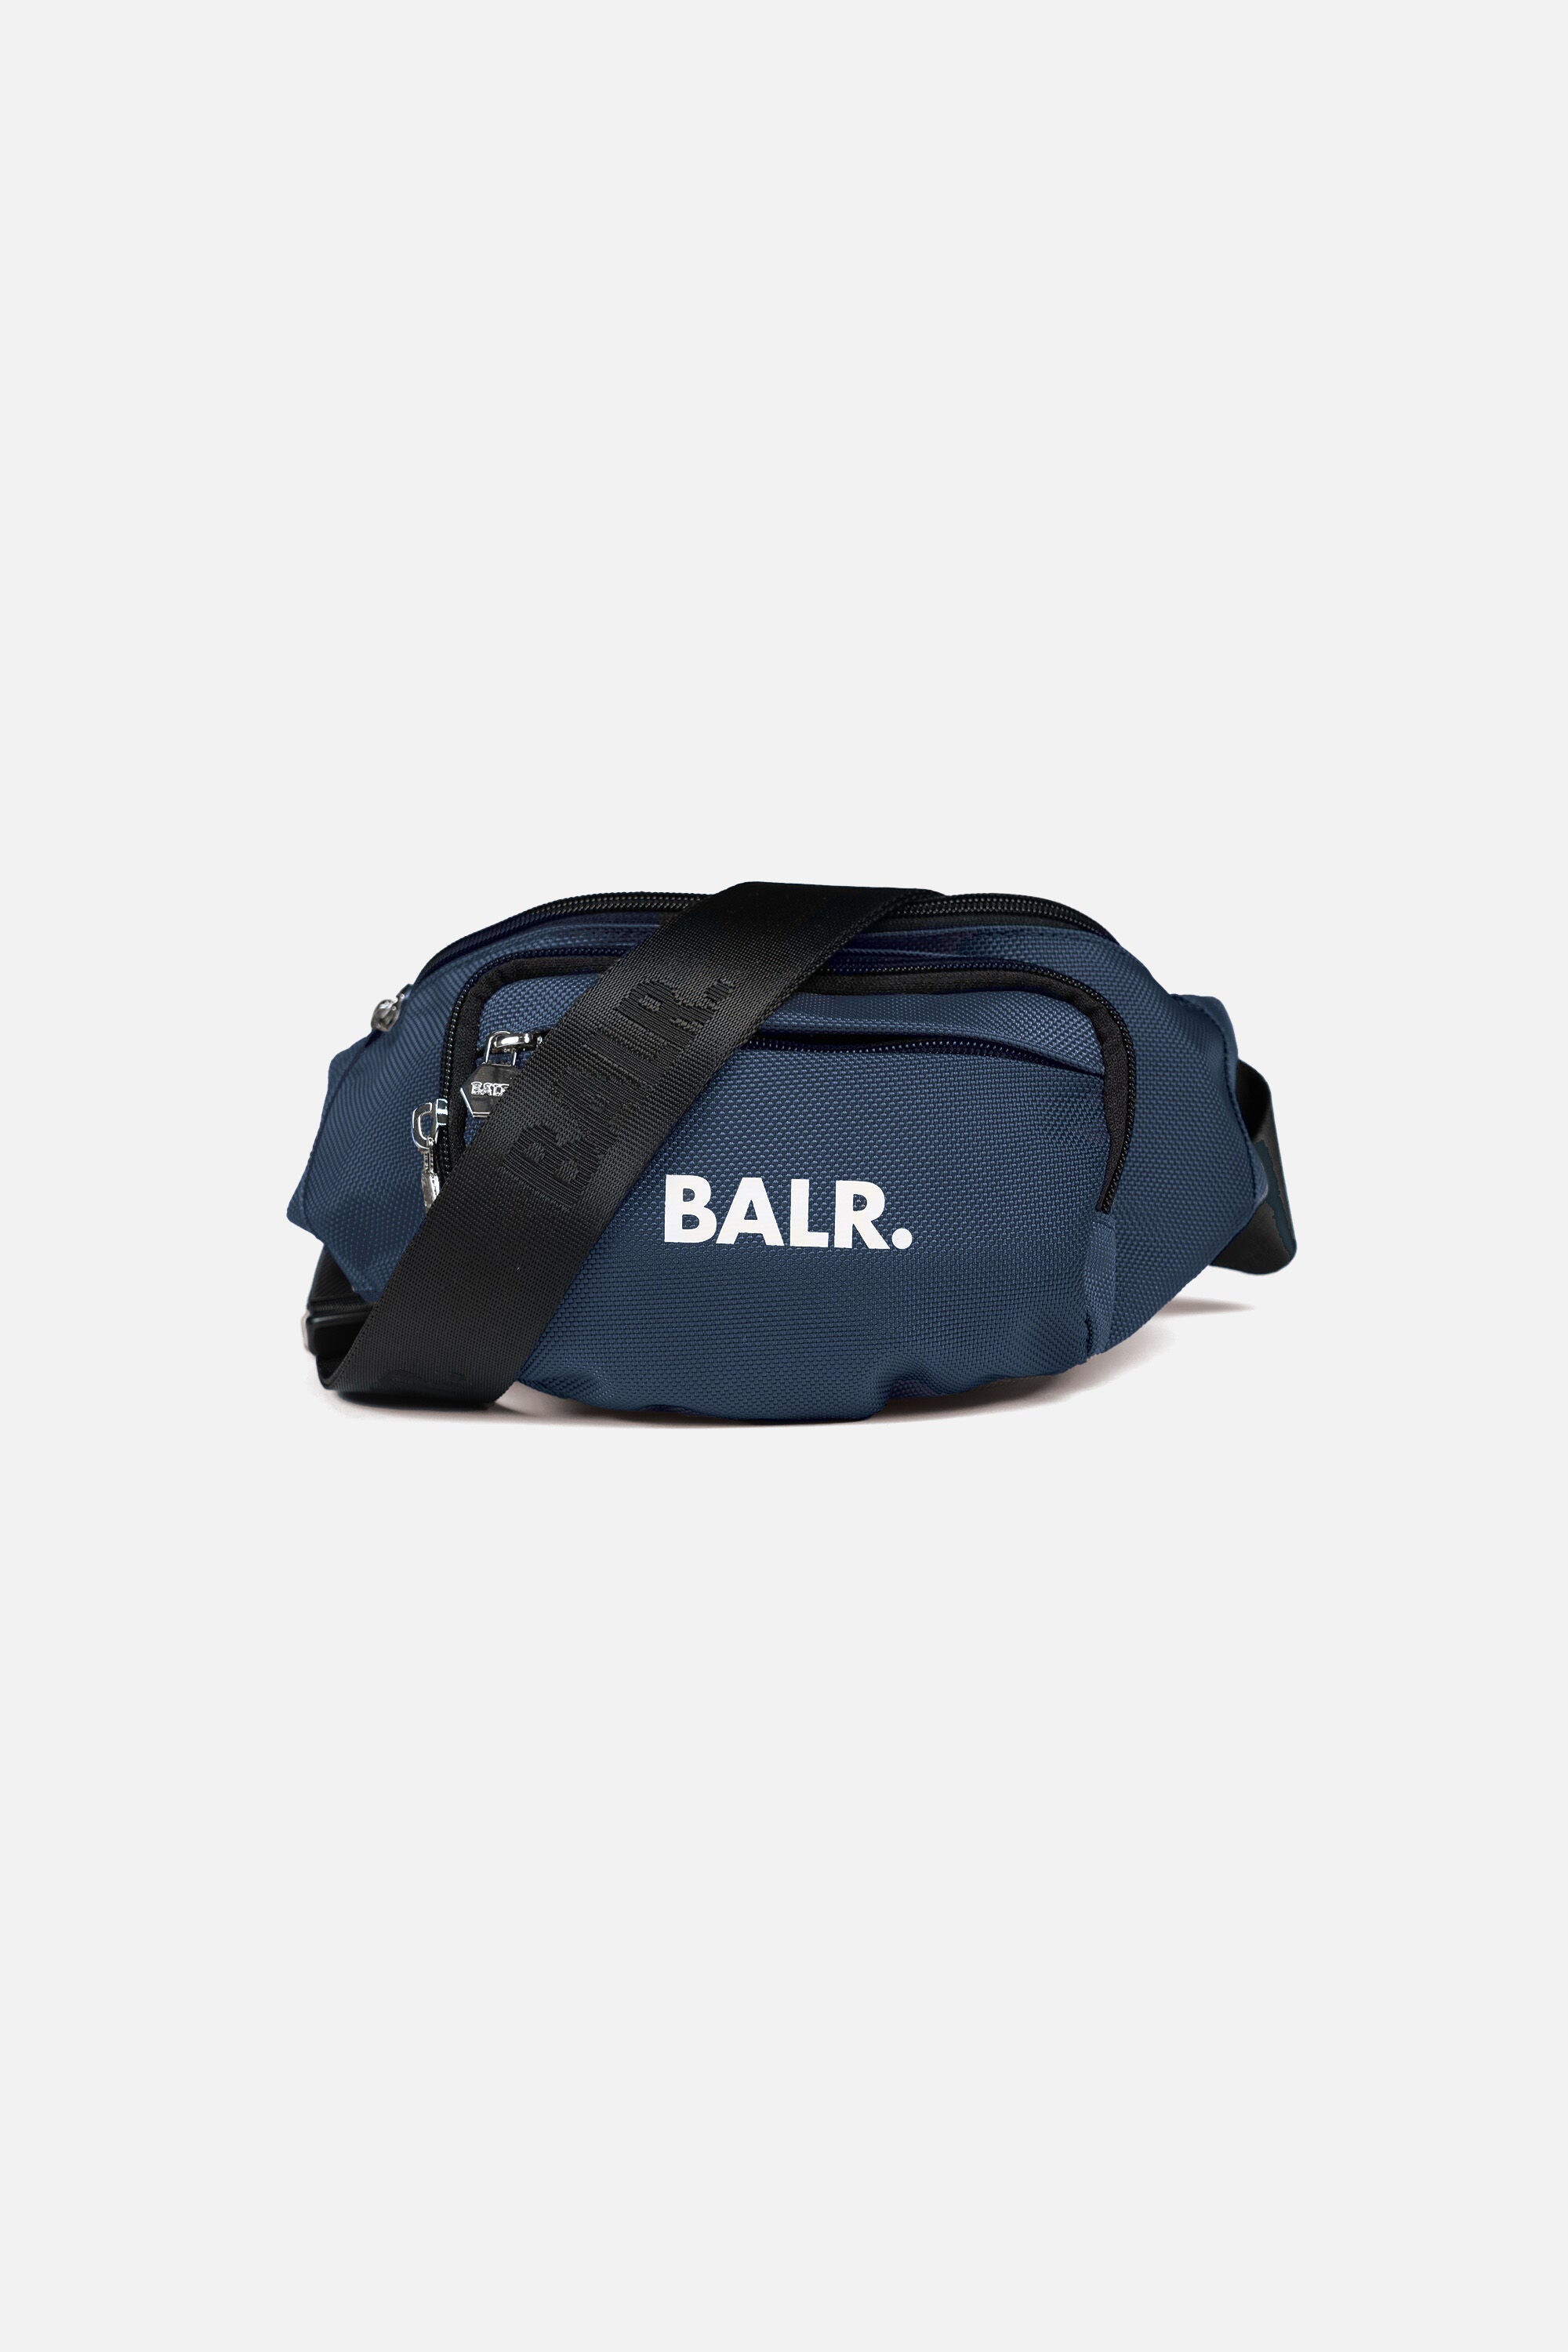 U-Series Small Cross Body Bag Coronet Blue – BALR.